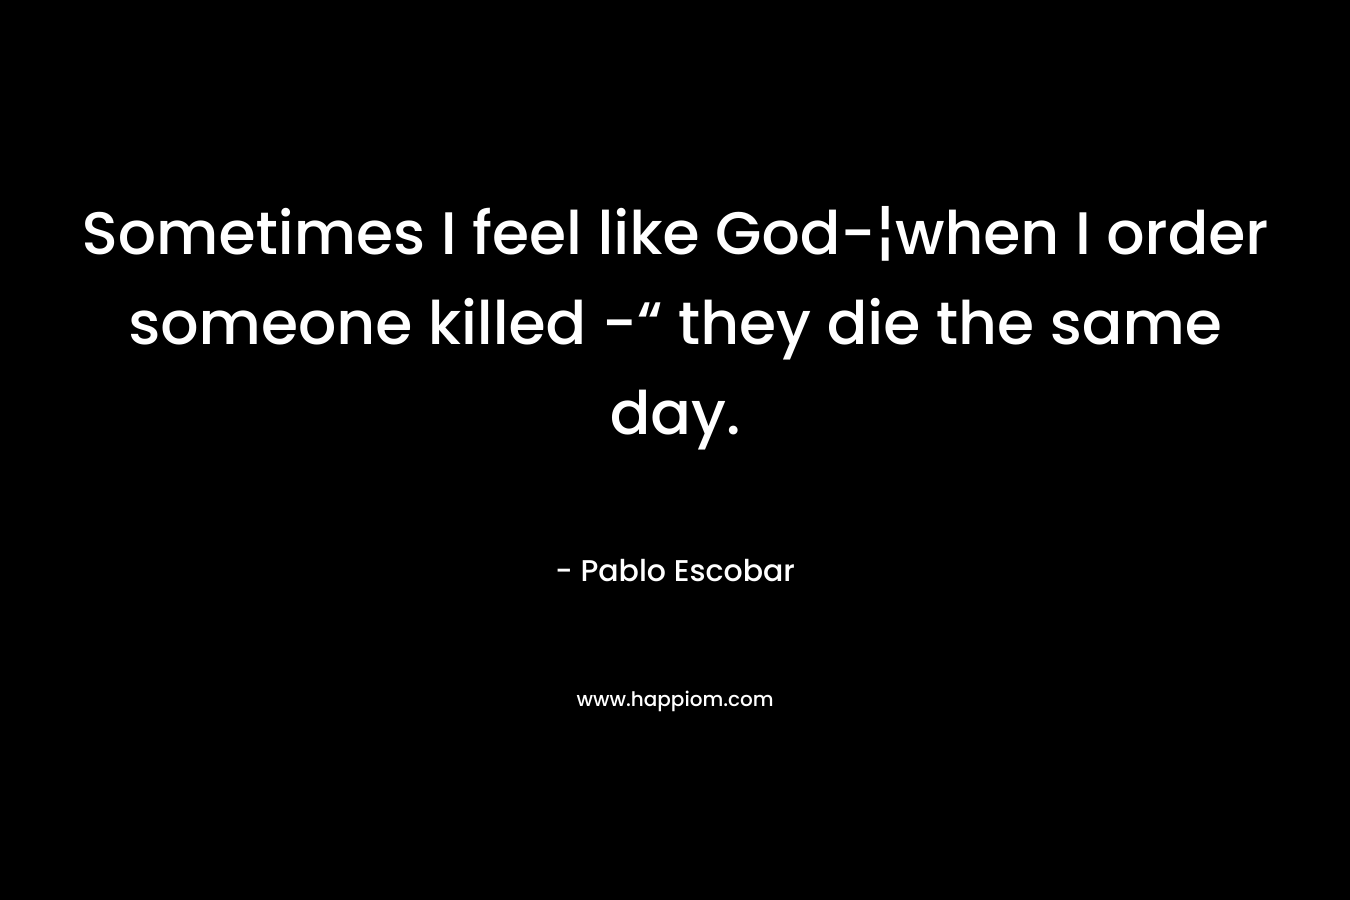 Sometimes I feel like God-¦when I order someone killed -“ they die the same day.